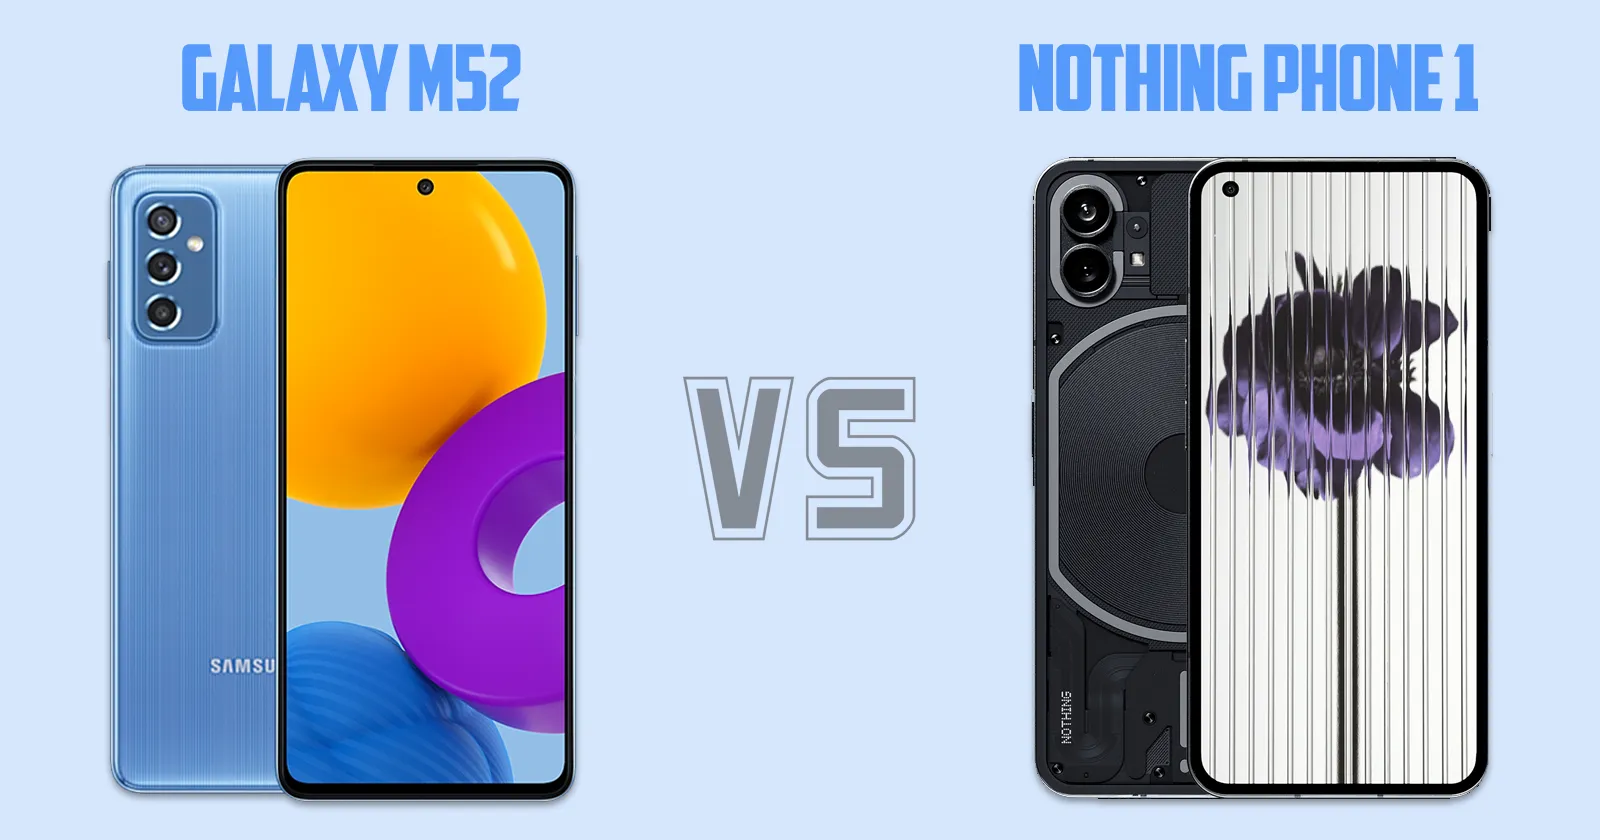 Samsung Galaxy M52 vs Nothing Phone (1) [ Full Comparison ]